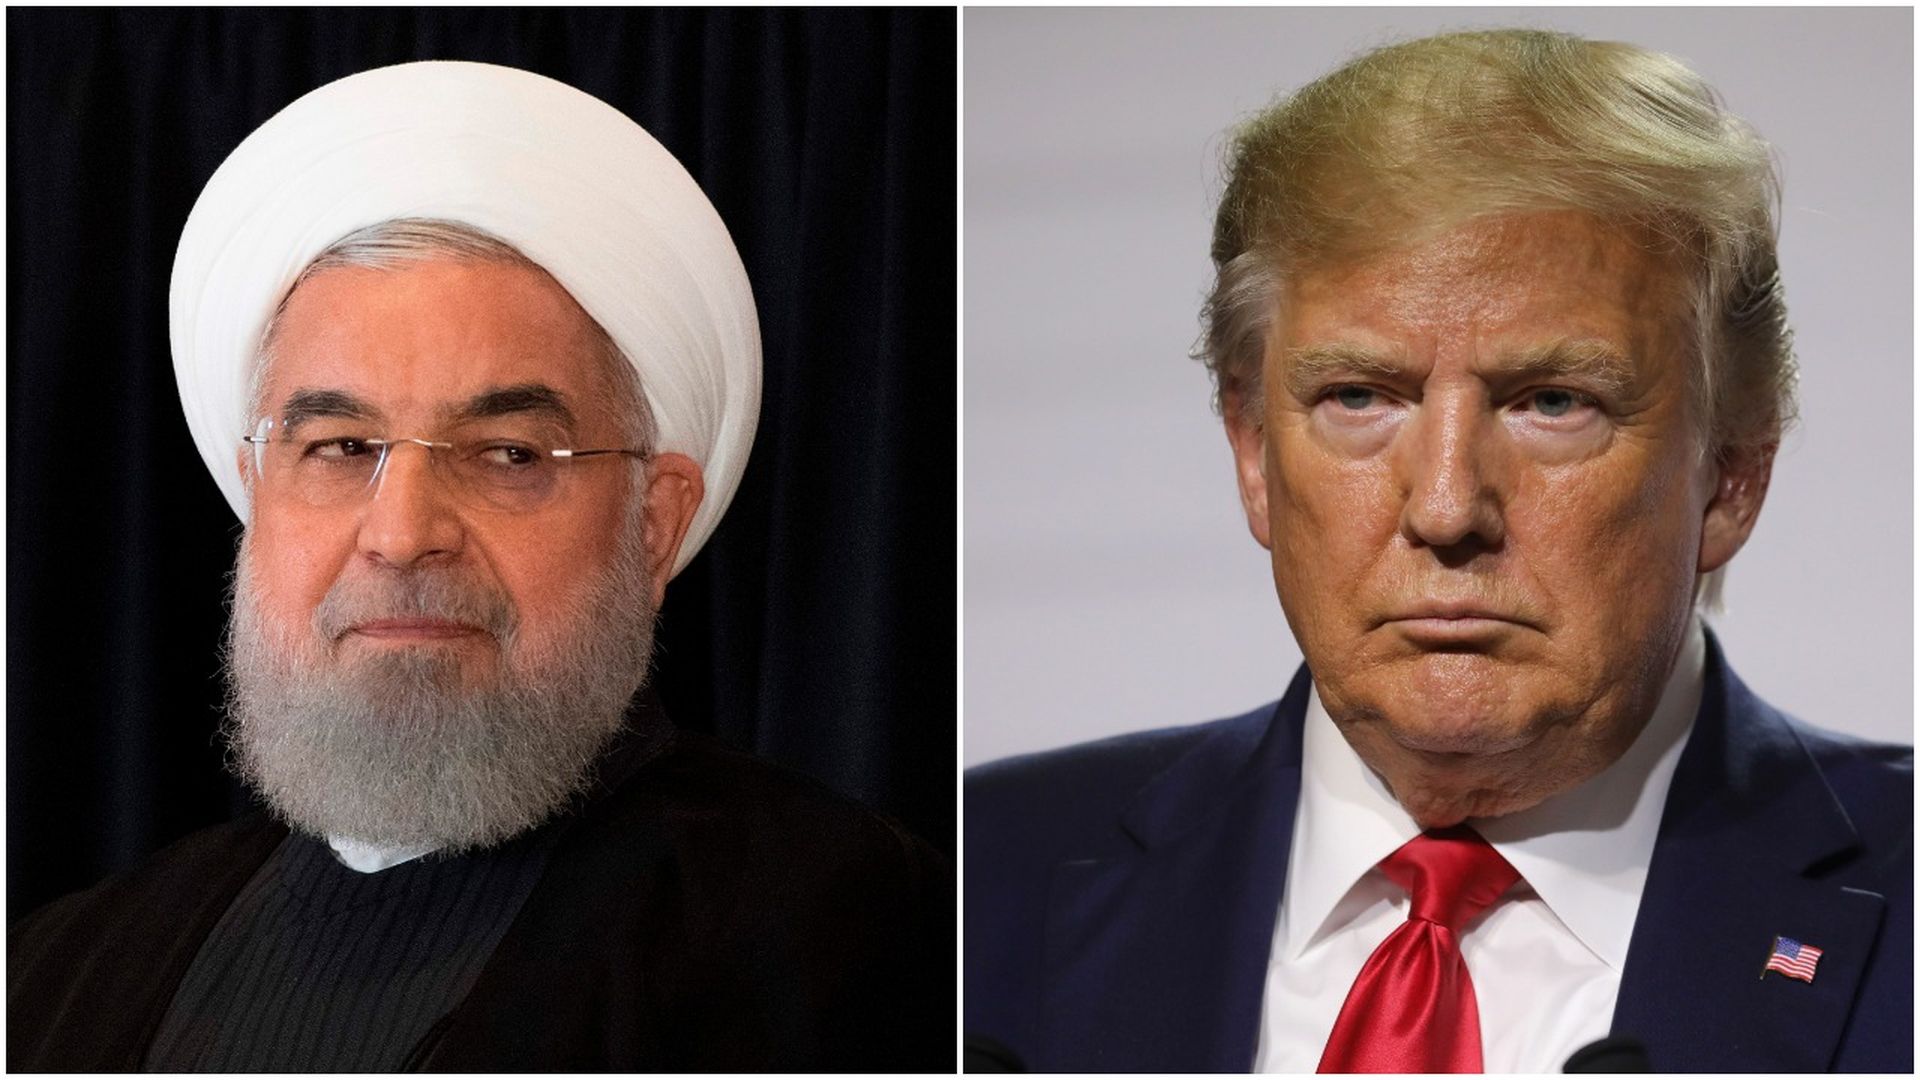 Iranian President Hassan Rouhani and U.S. President Donald Trump